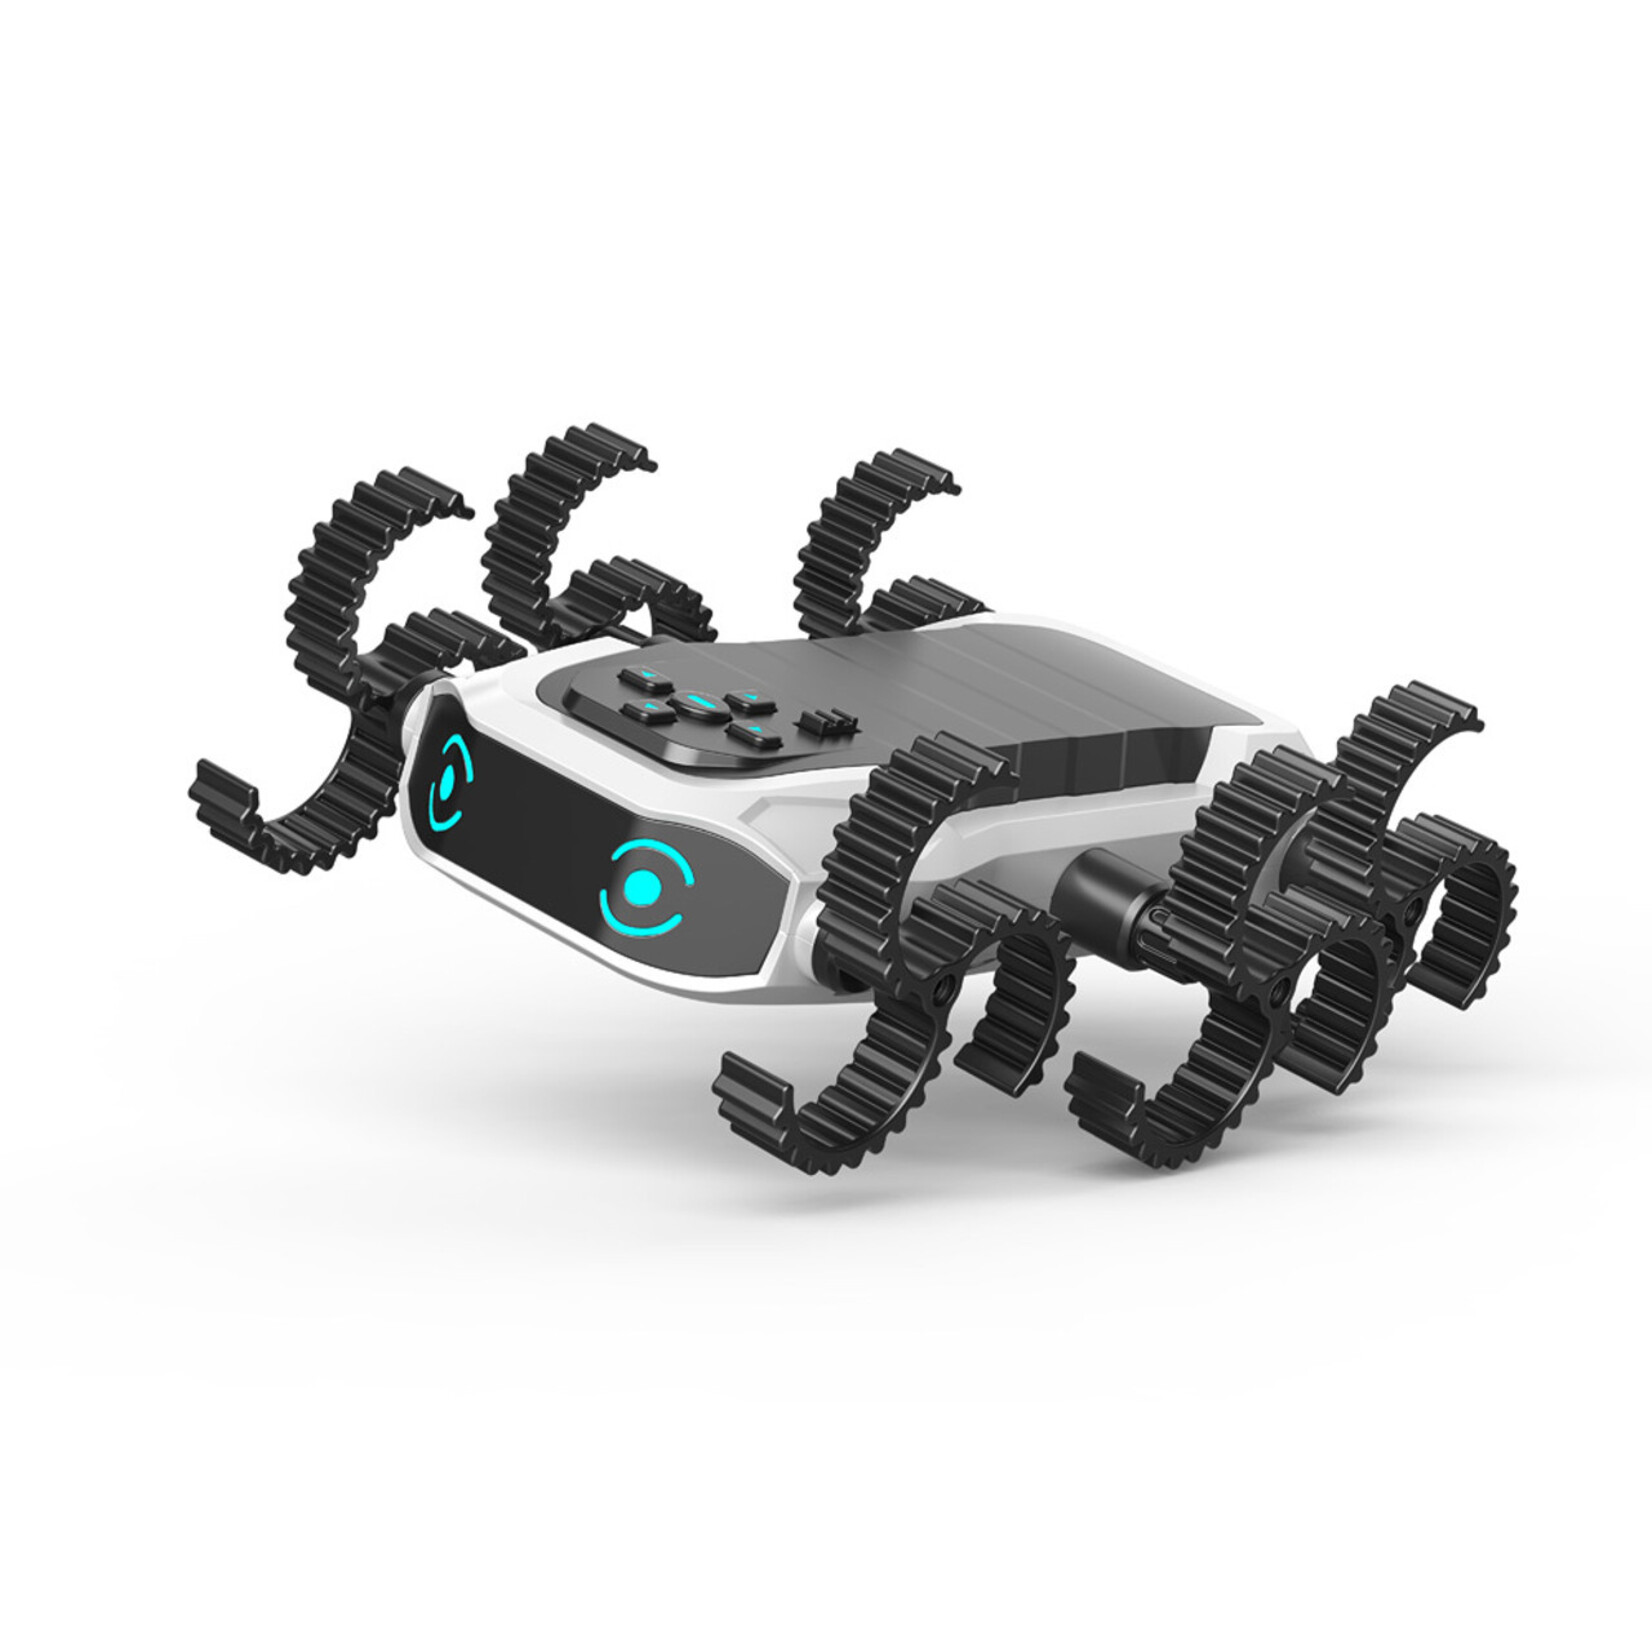 OWIKIT OWIKIT CyberCrawler Robot #OWI995